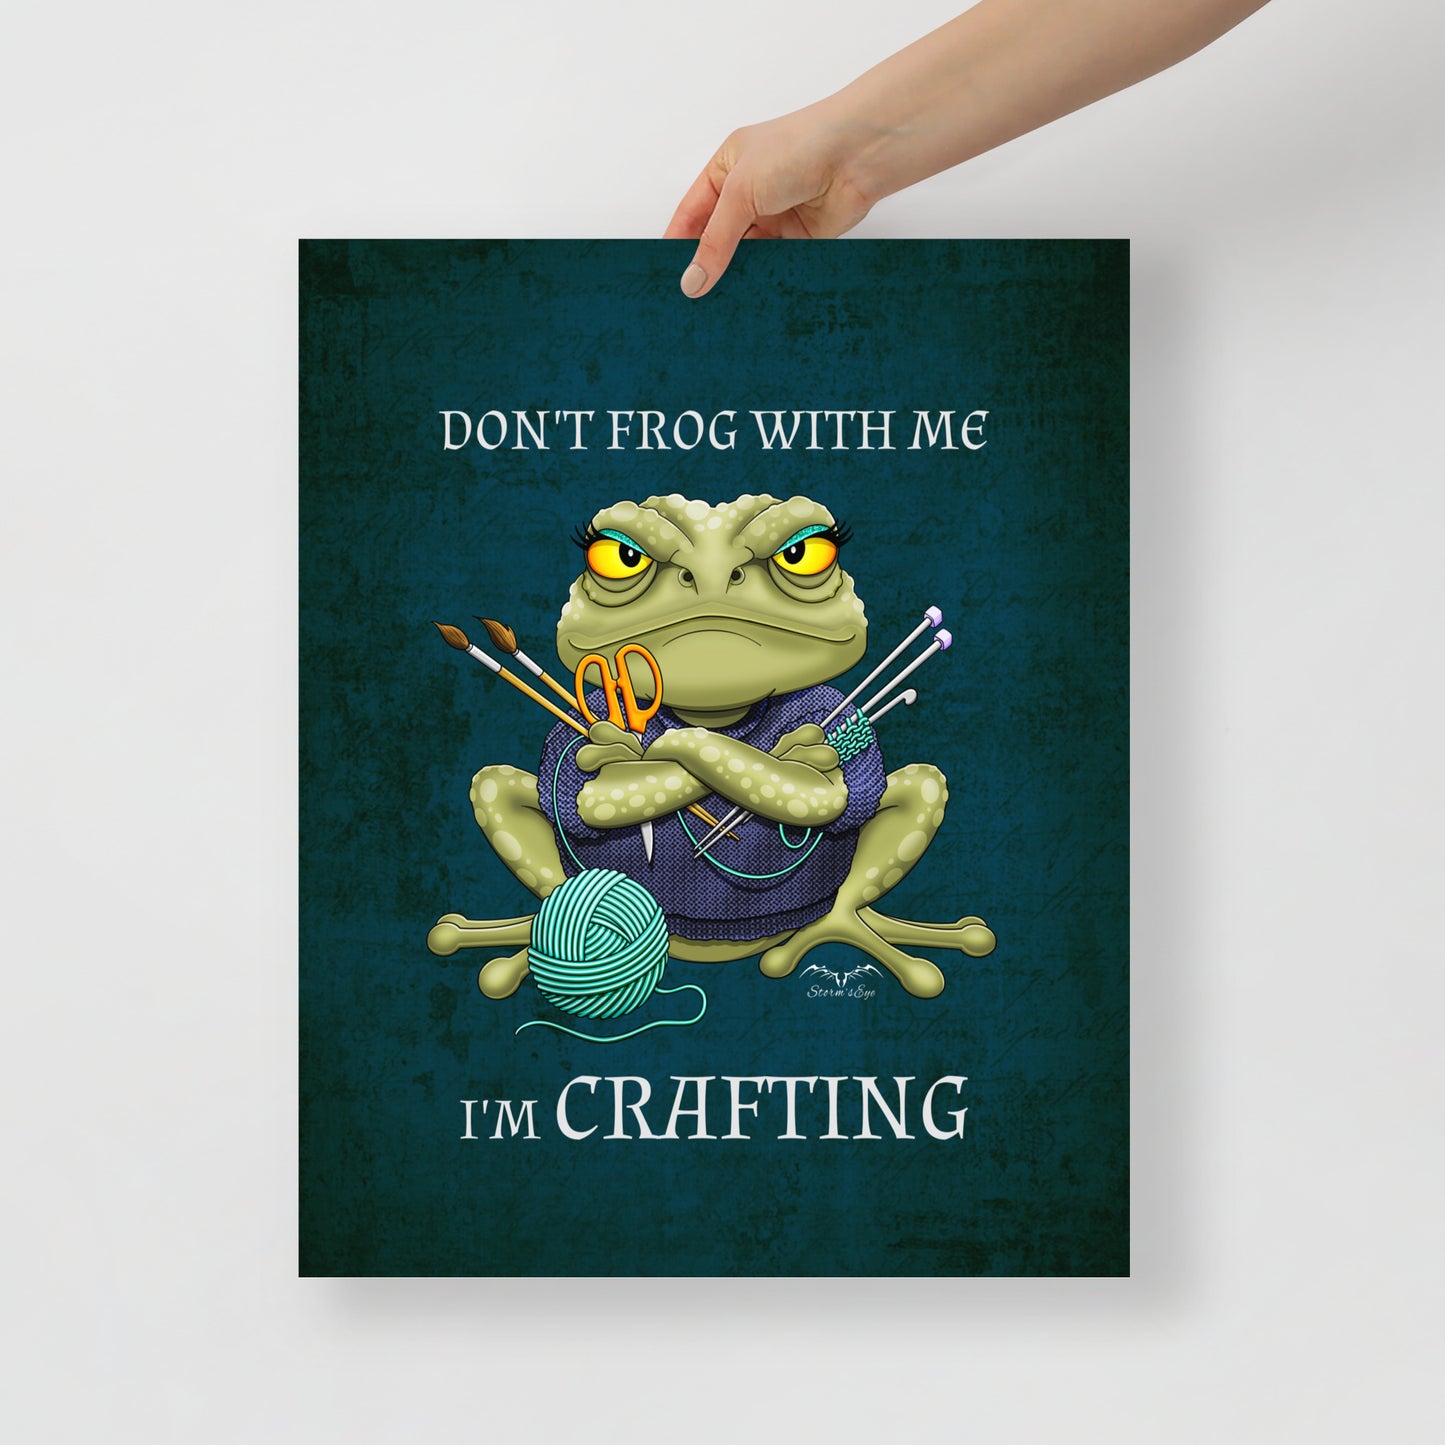 Stormseye design crafting frog museum quality art print 16x20